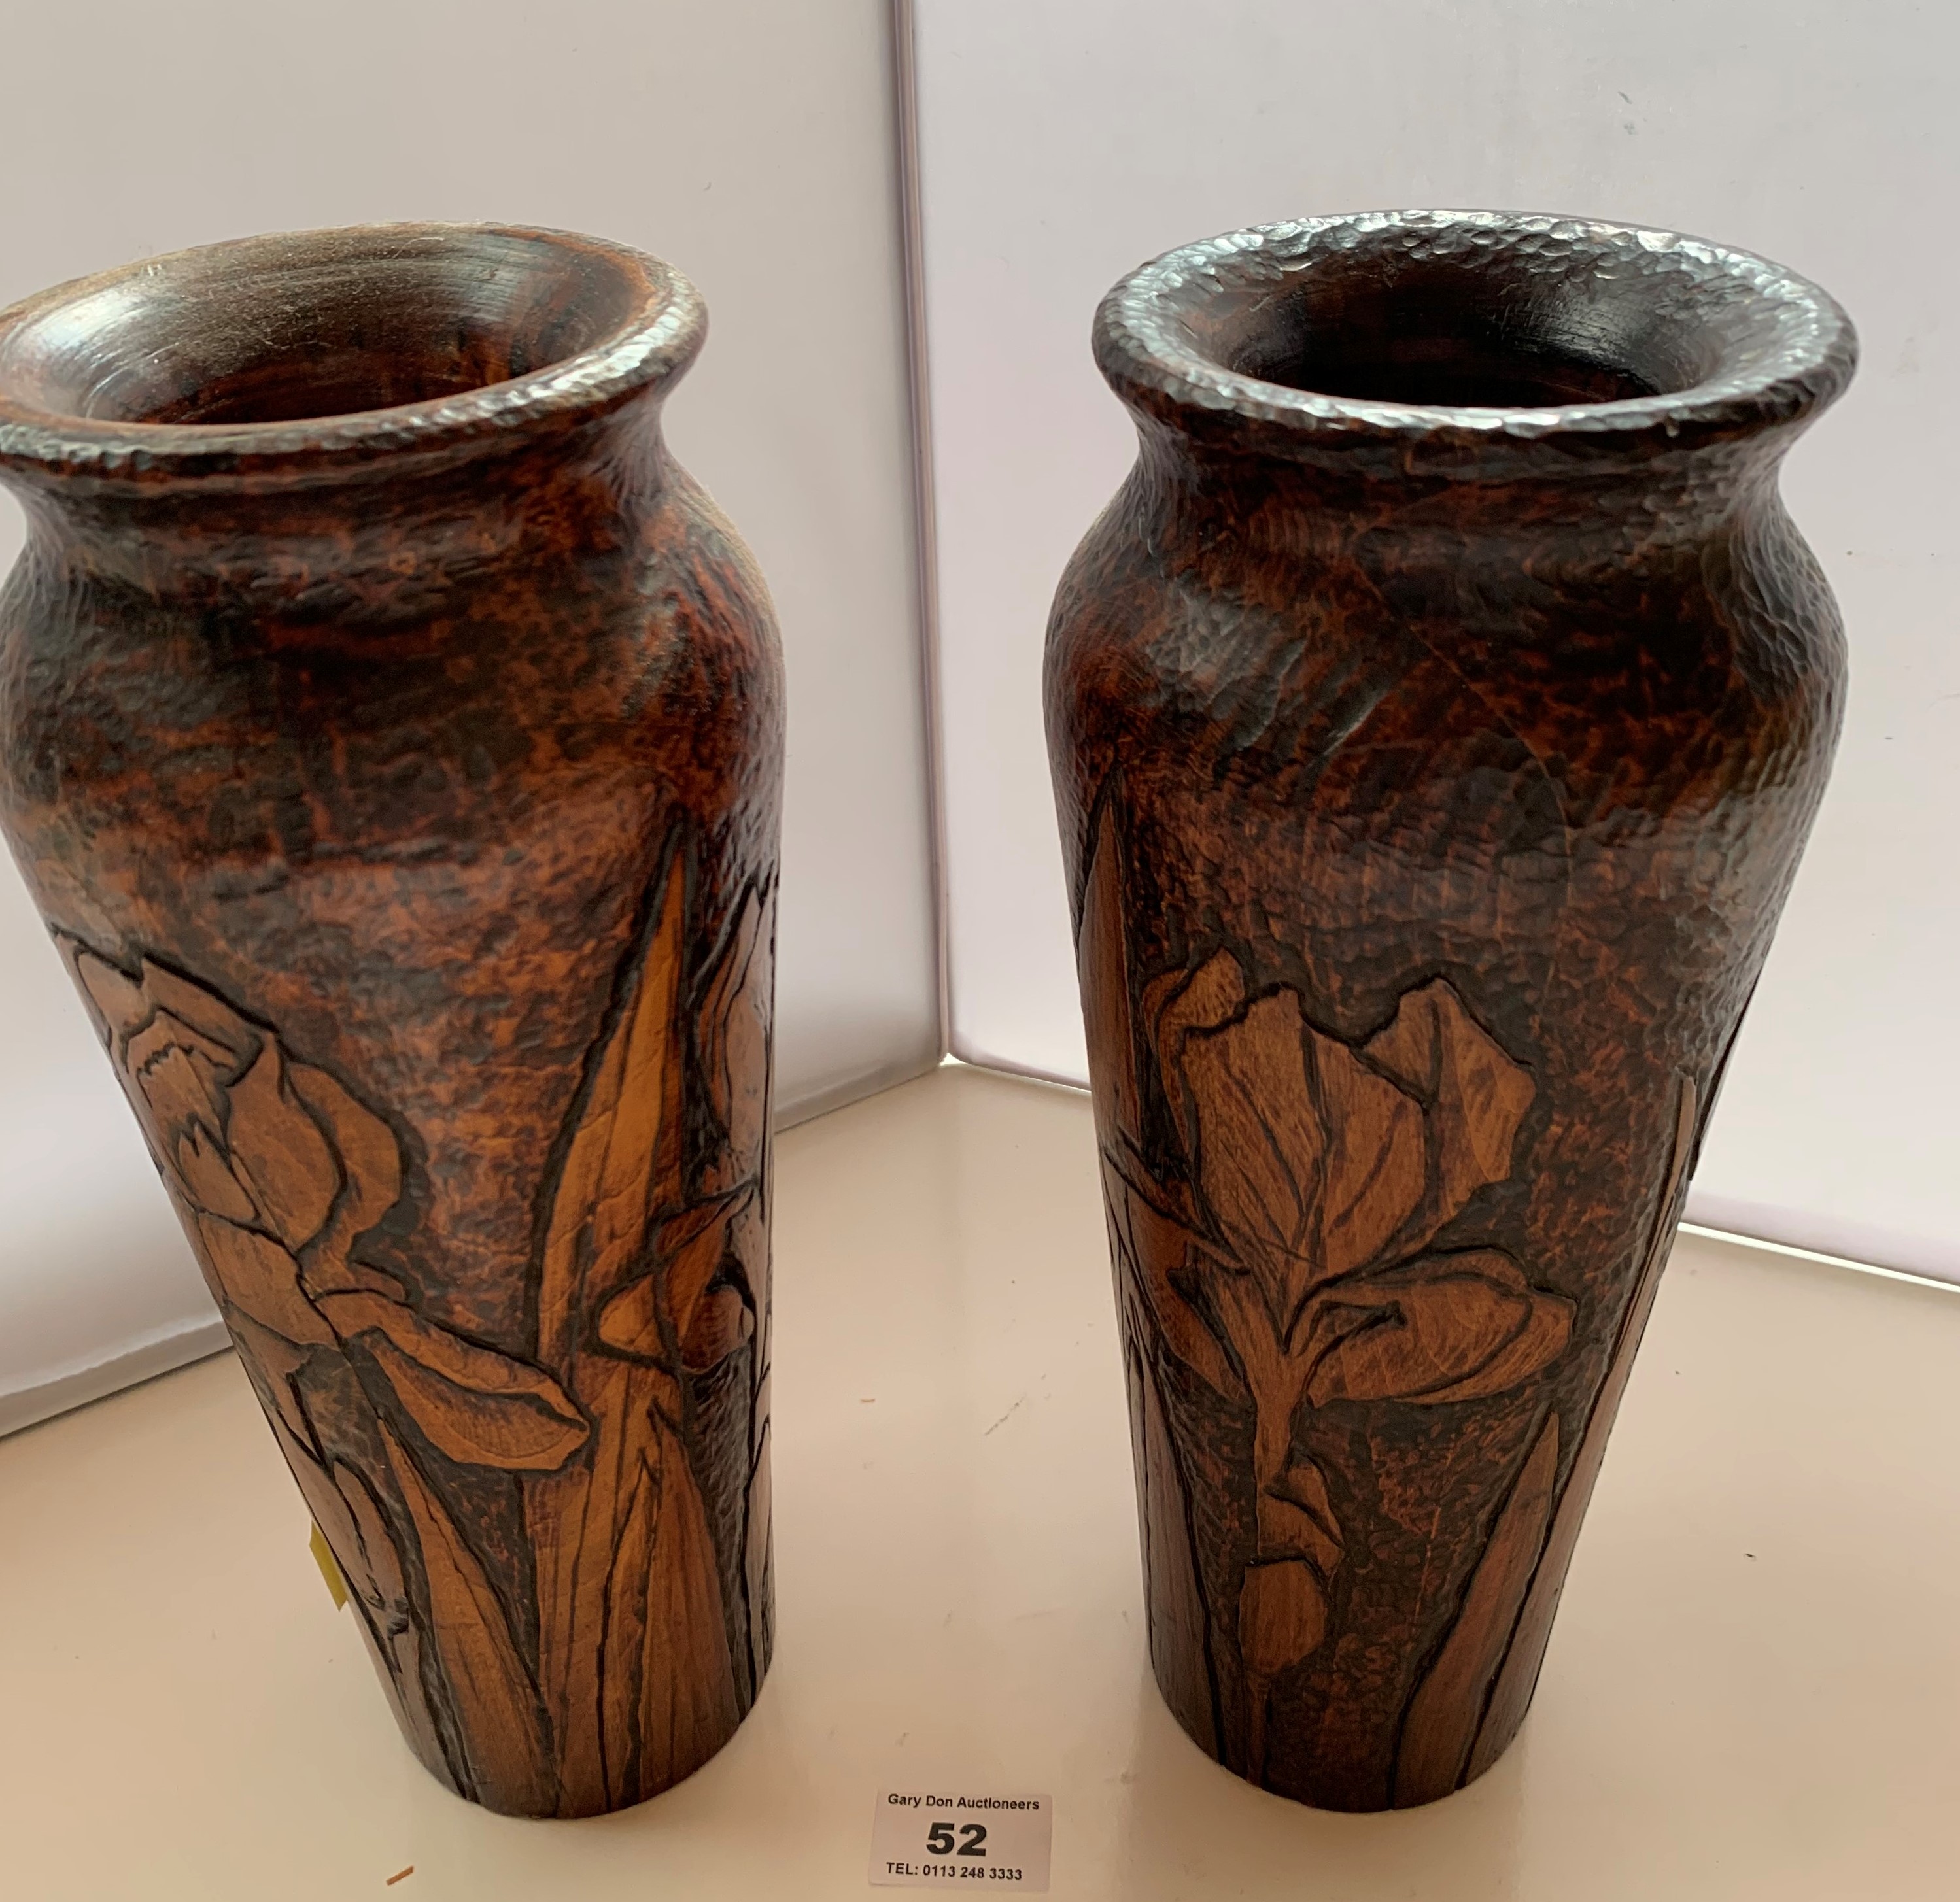 Pair of vintage pokerwork treen vases, 11” (28cm) high. Good condition